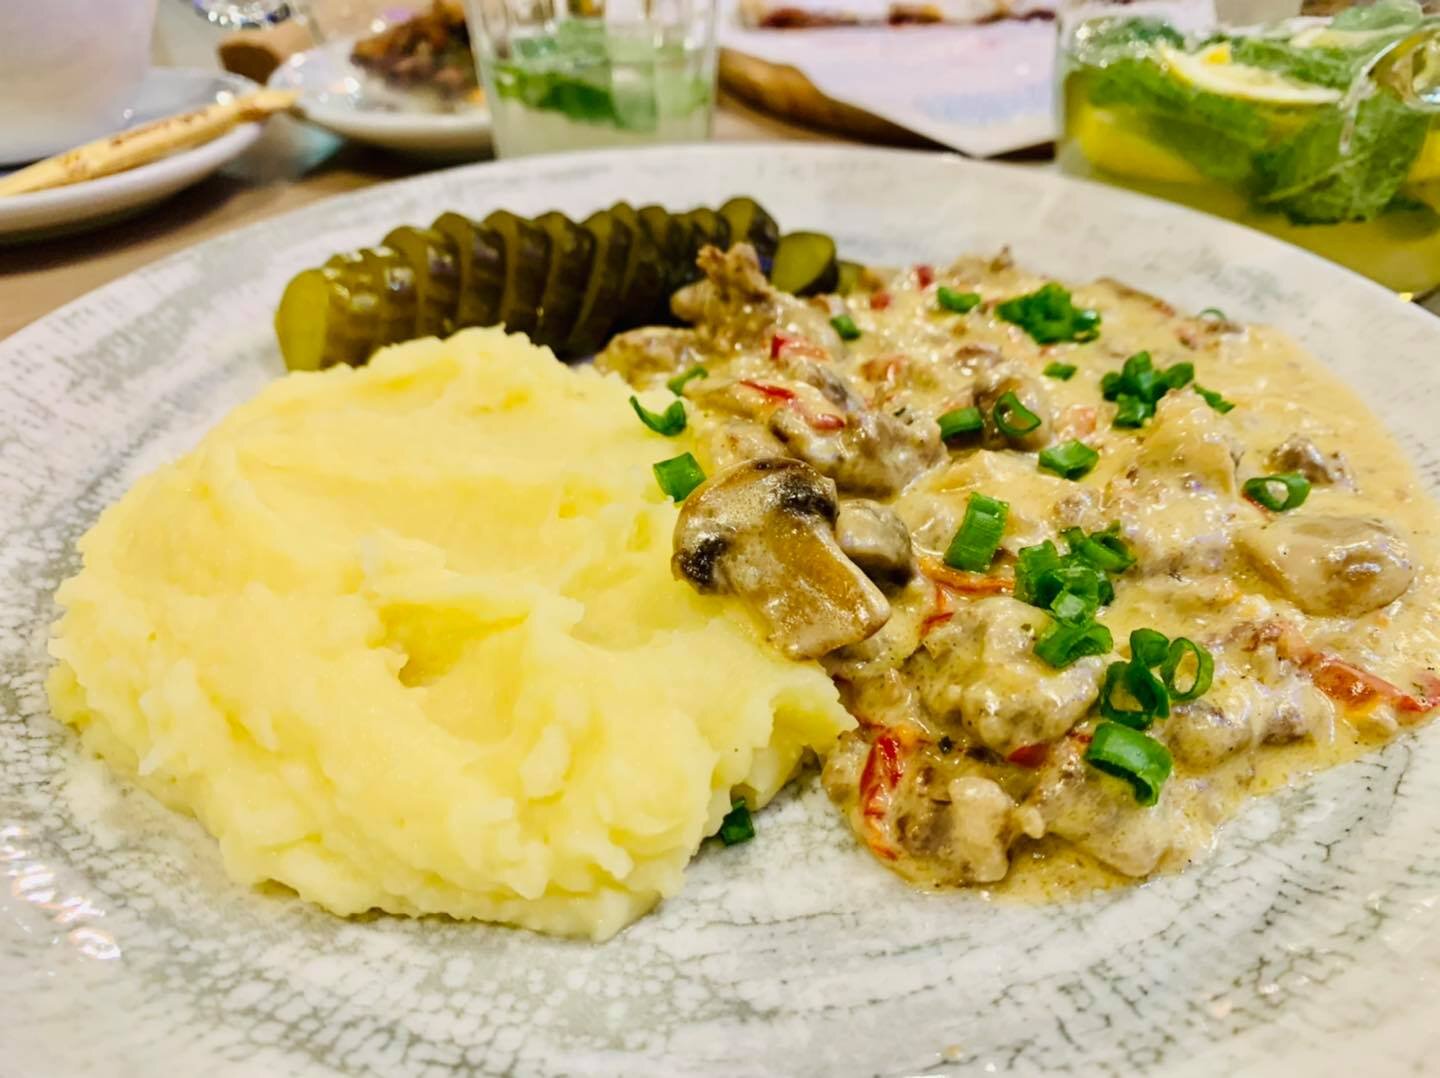 Tried so many local foods - Moldovan Cuisine22.jpg